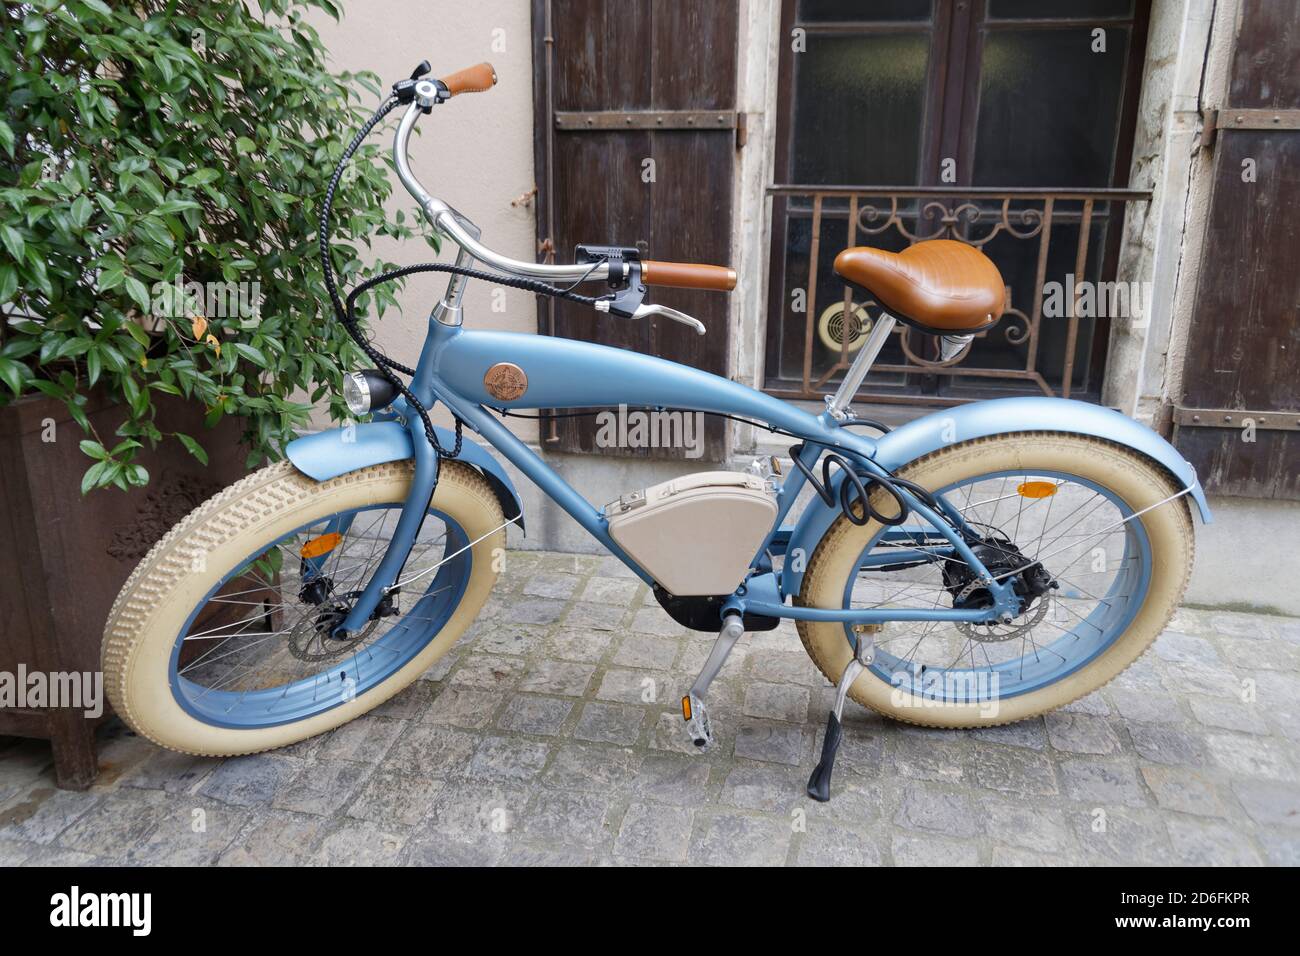 Aigues-Mortes, Frankreich.20. August 2020. Ein Oldtimer-Bike in  Aigues-Mortes am 20. August 2020 Stockfotografie - Alamy